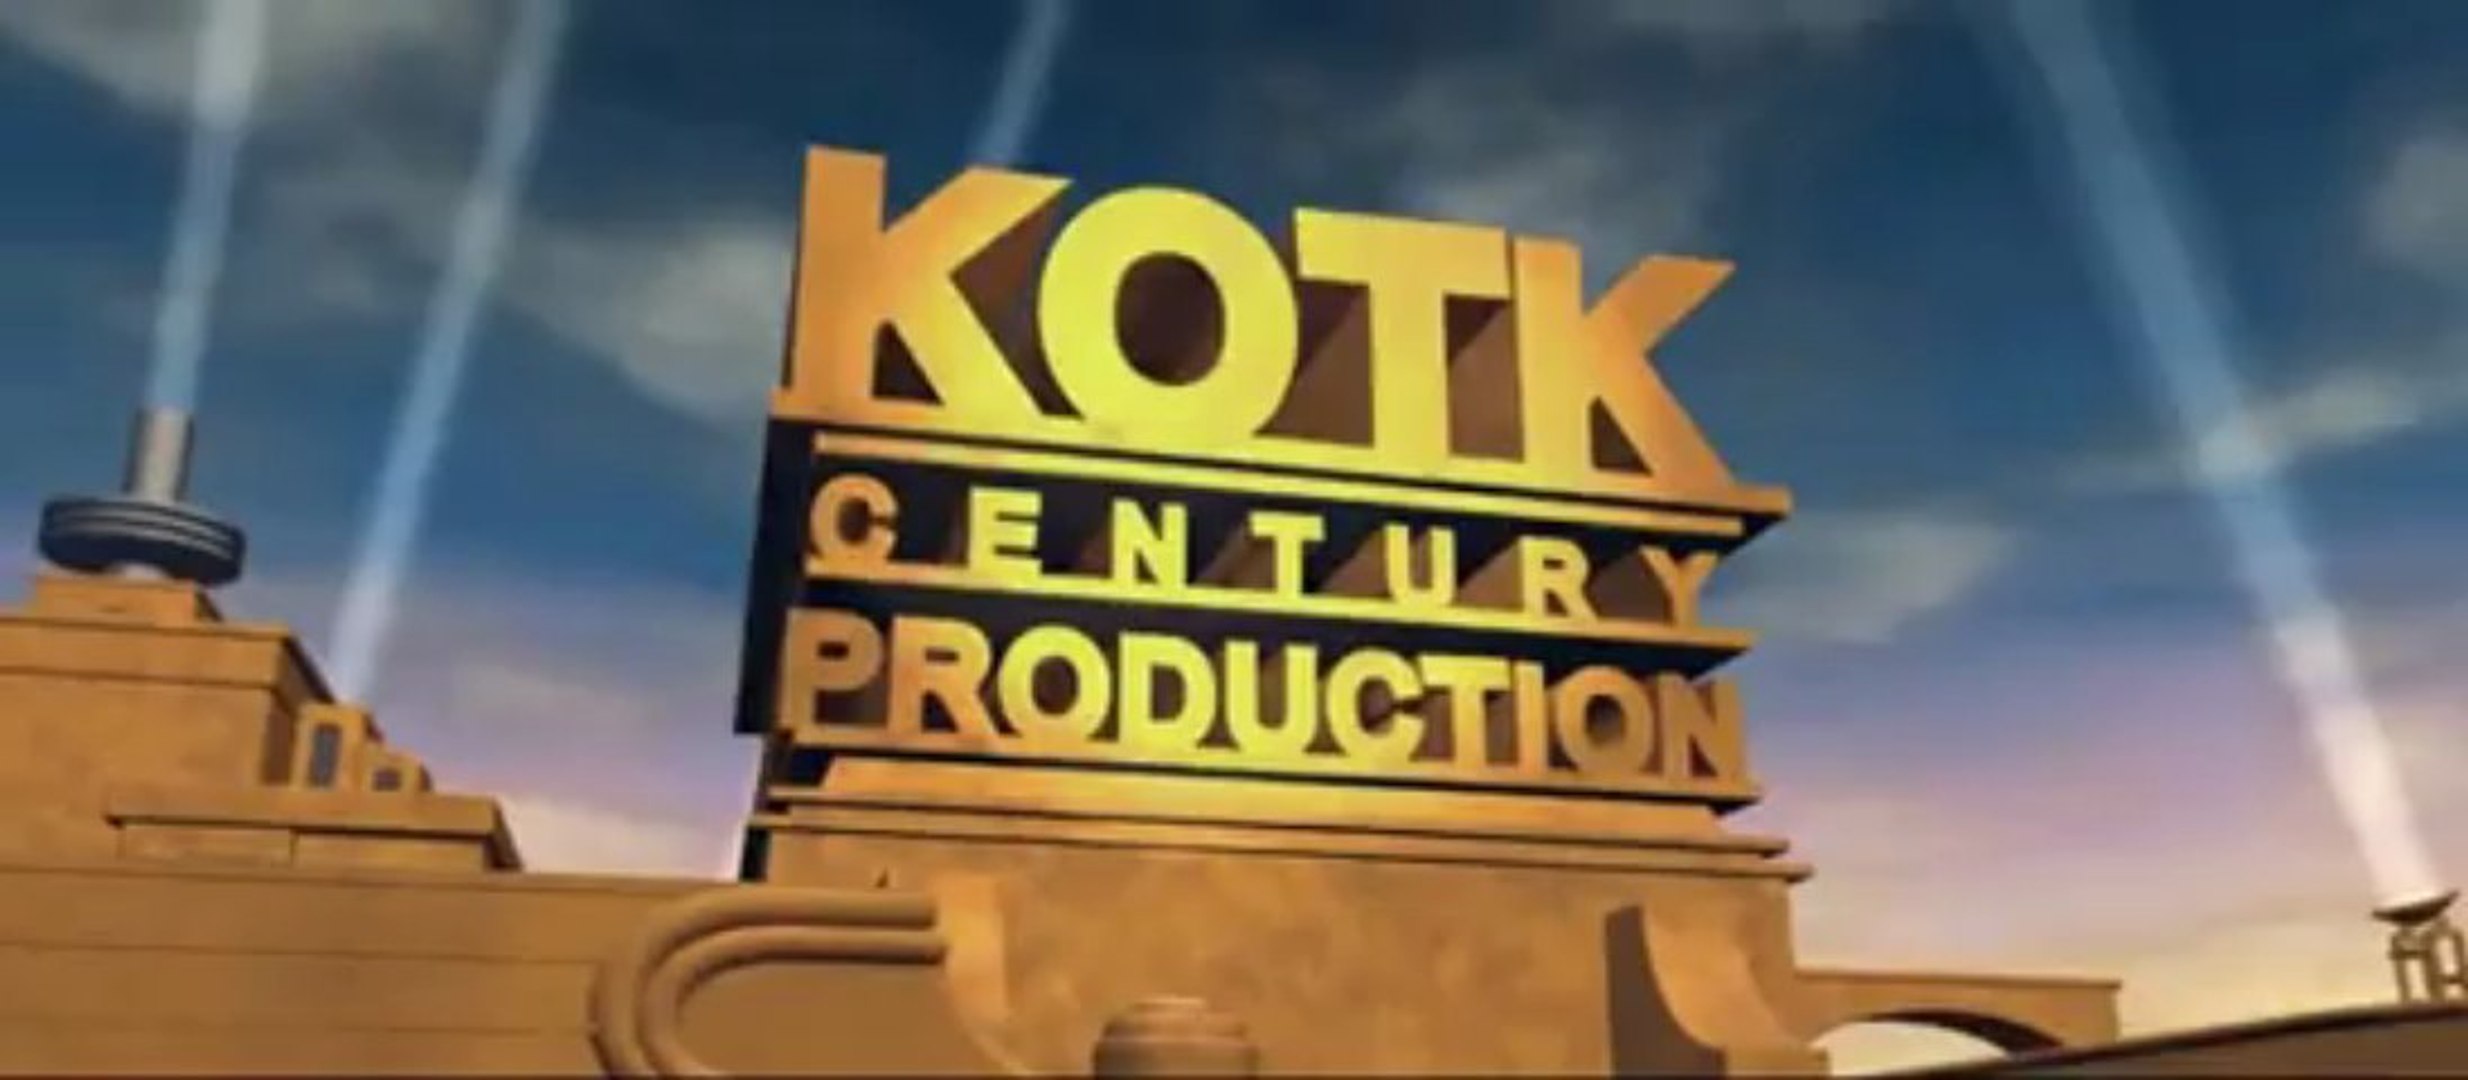 20th Century Fox Logo History - video Dailymotion